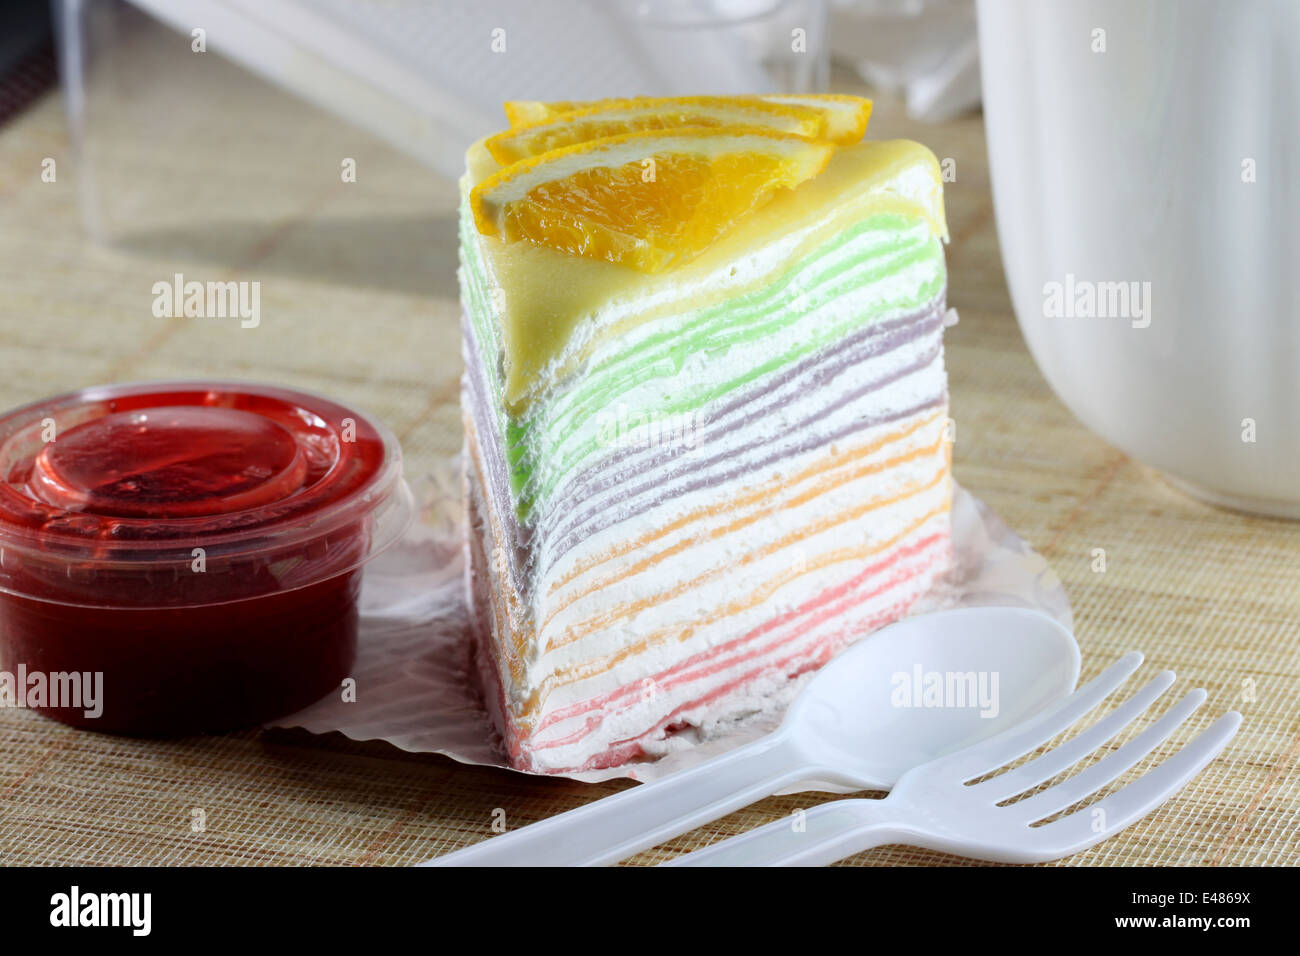 orange cake and strawberry jam for foods background. Stock Photo